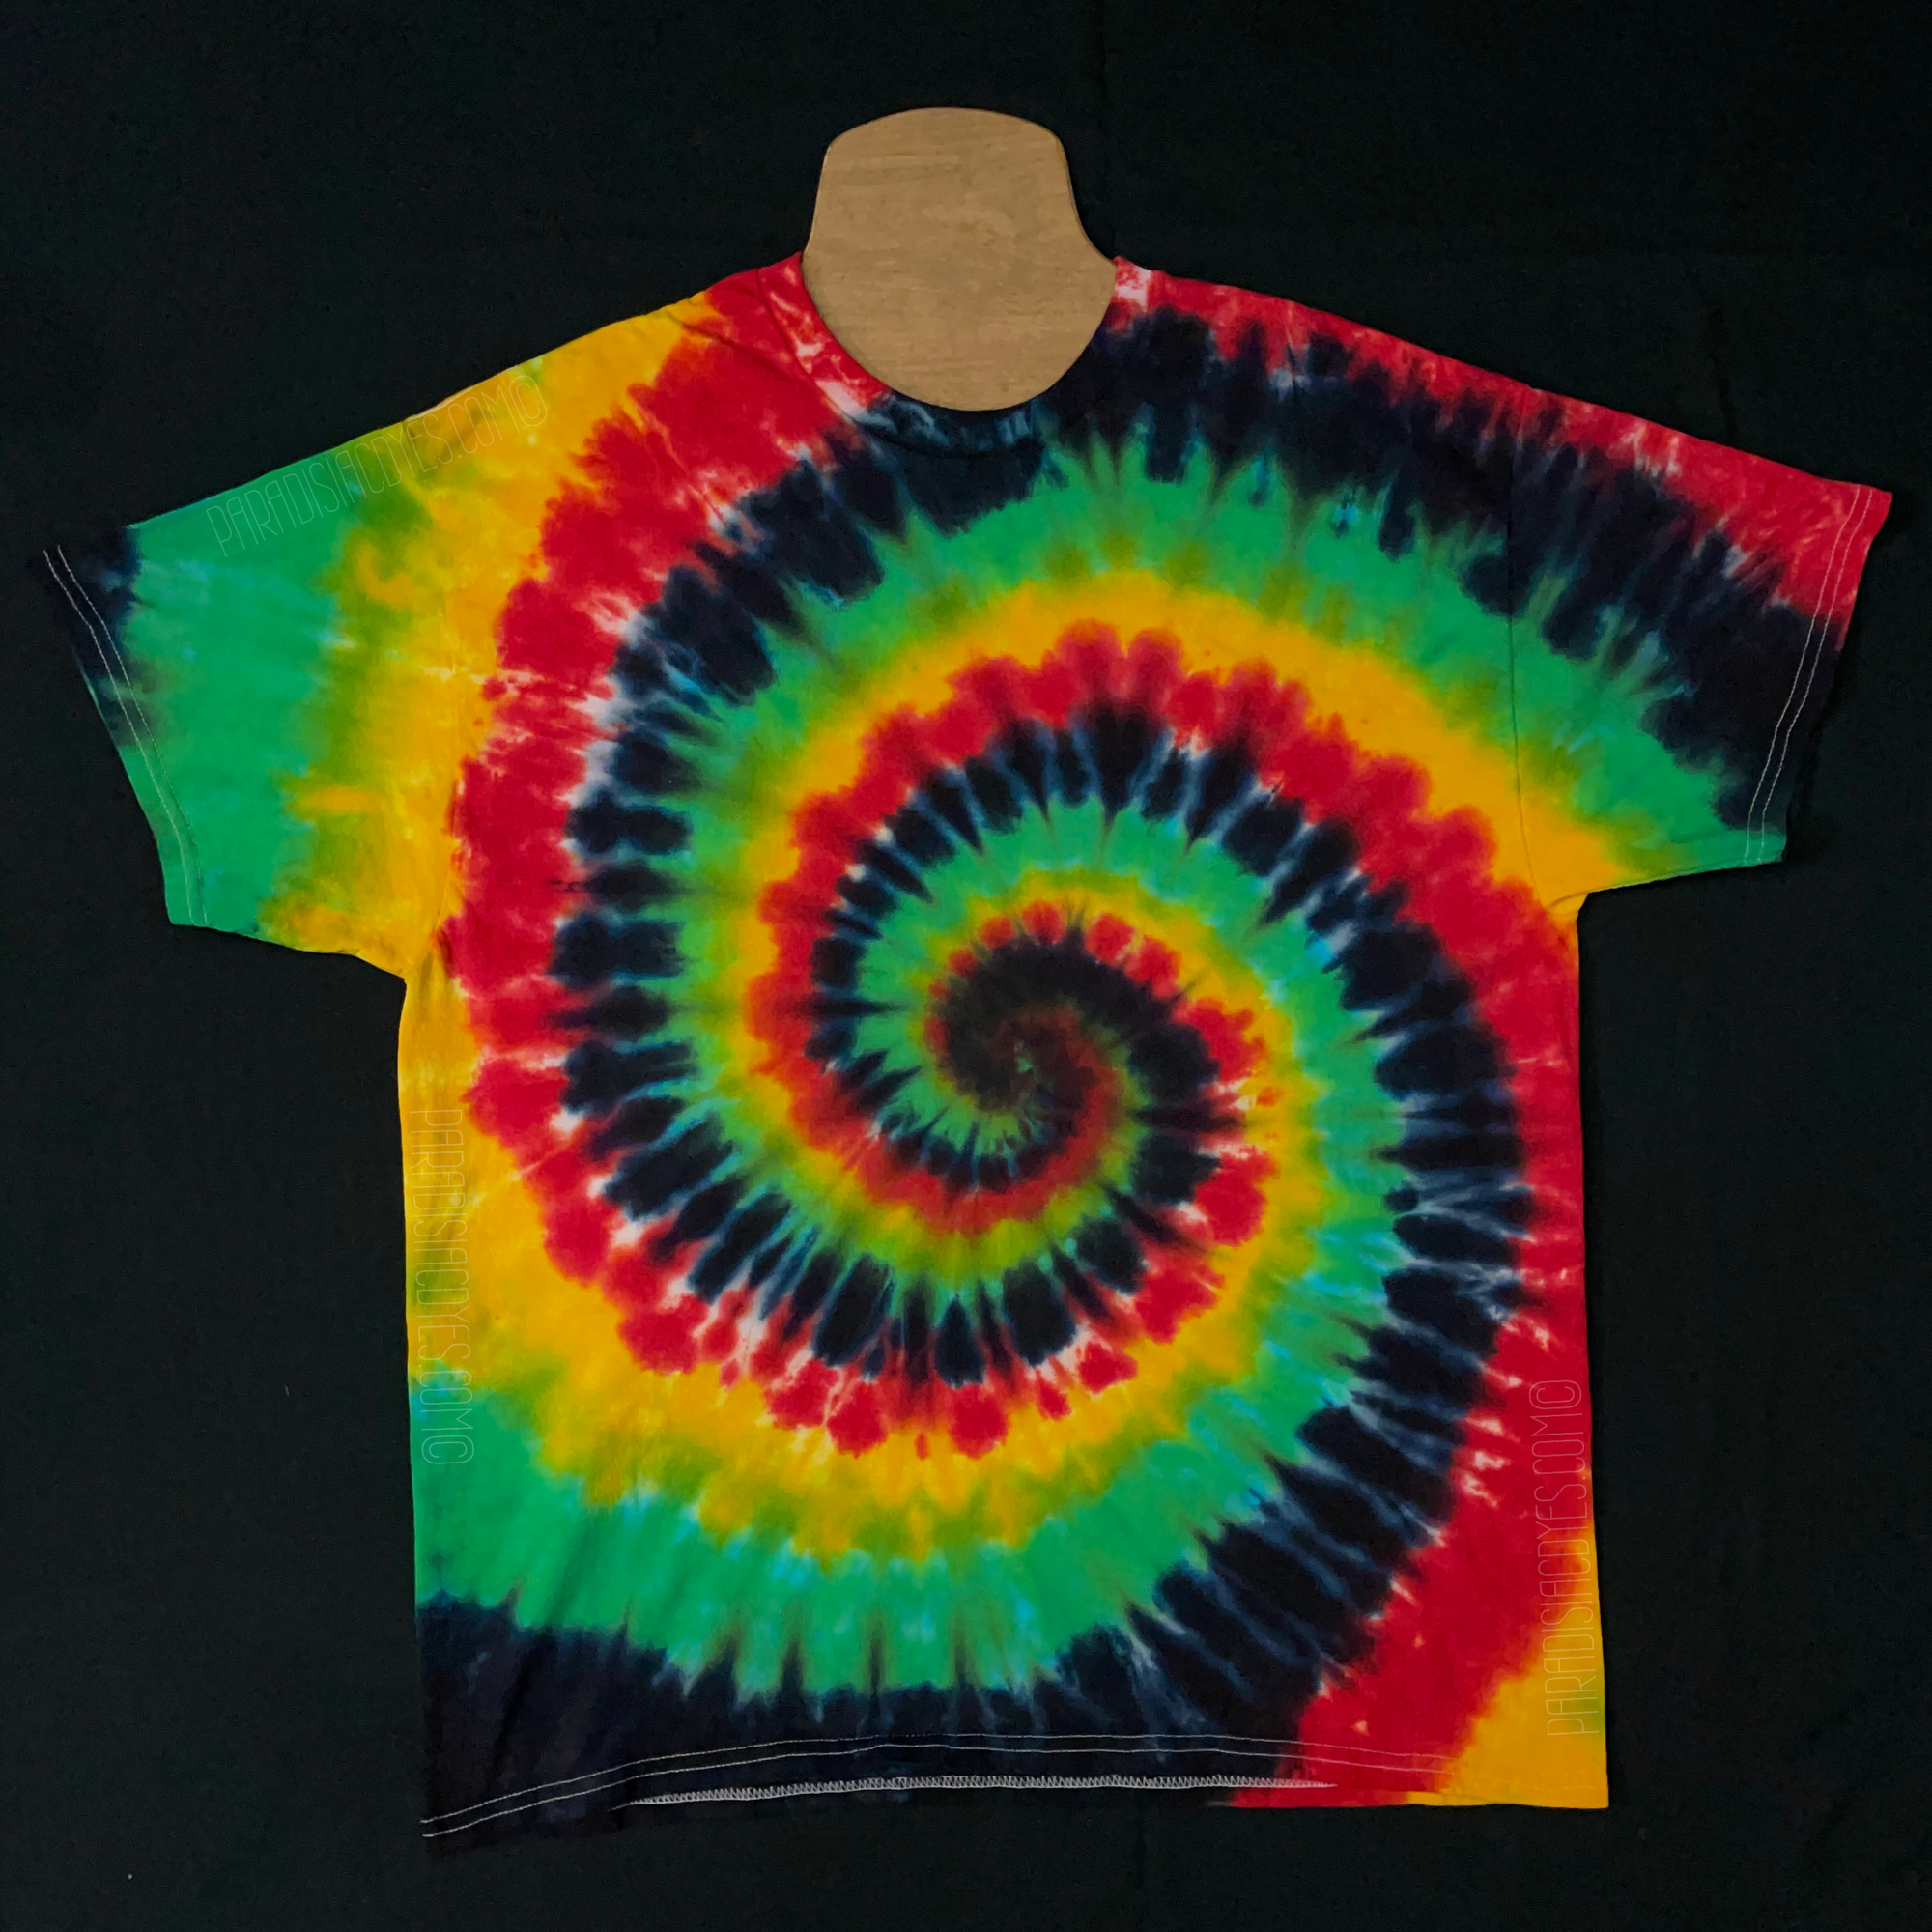 Black Rasta Spiral Tie Dye T-Shirt